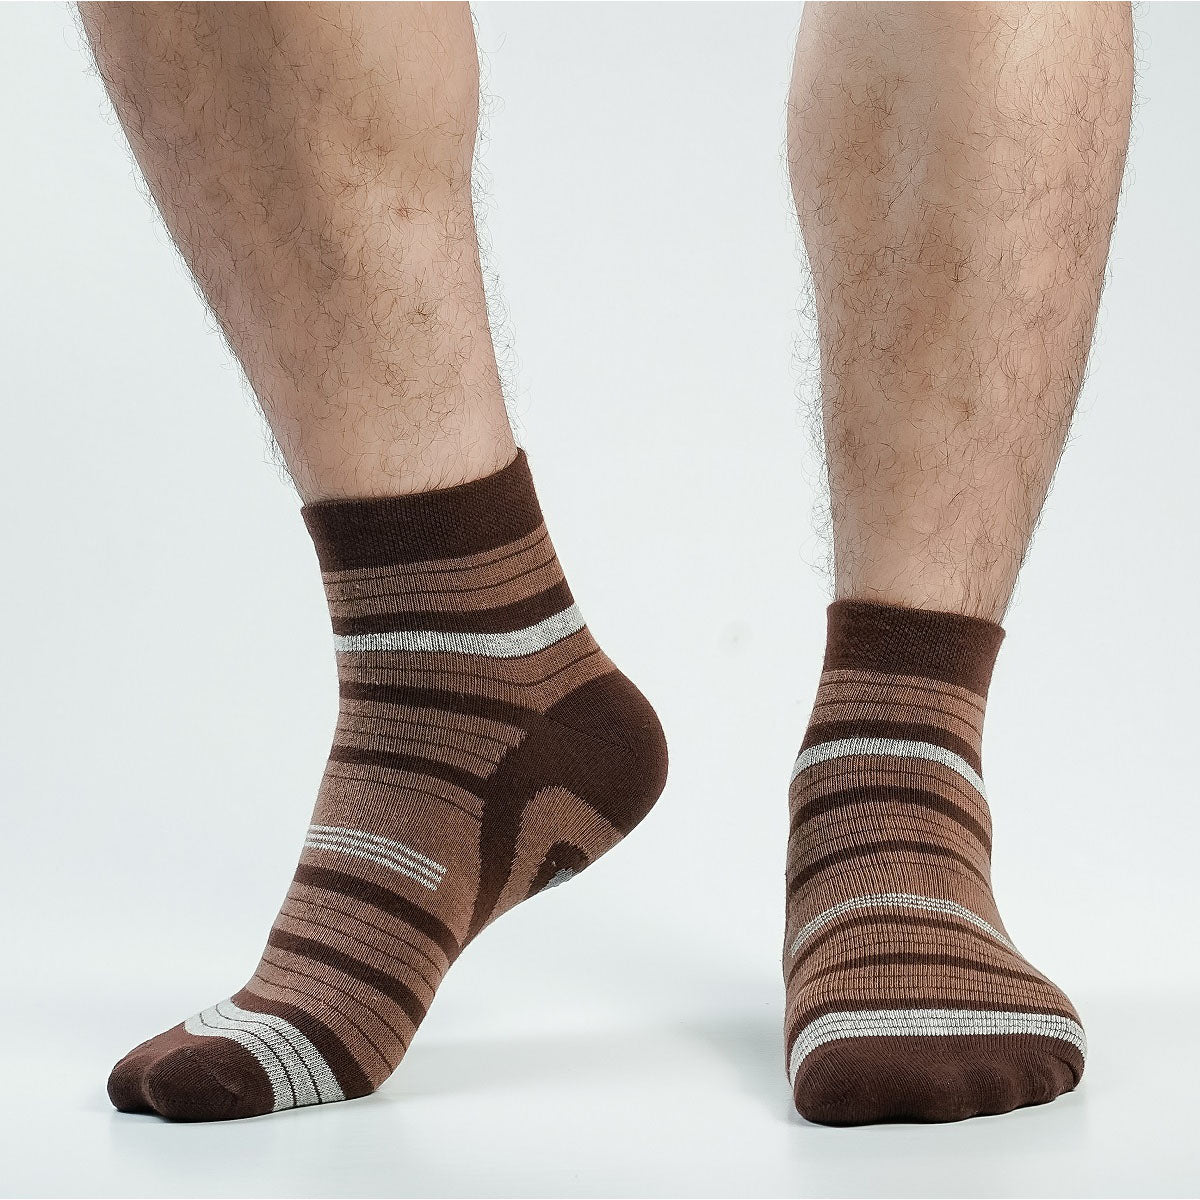 X-club Ankle Socks For Men